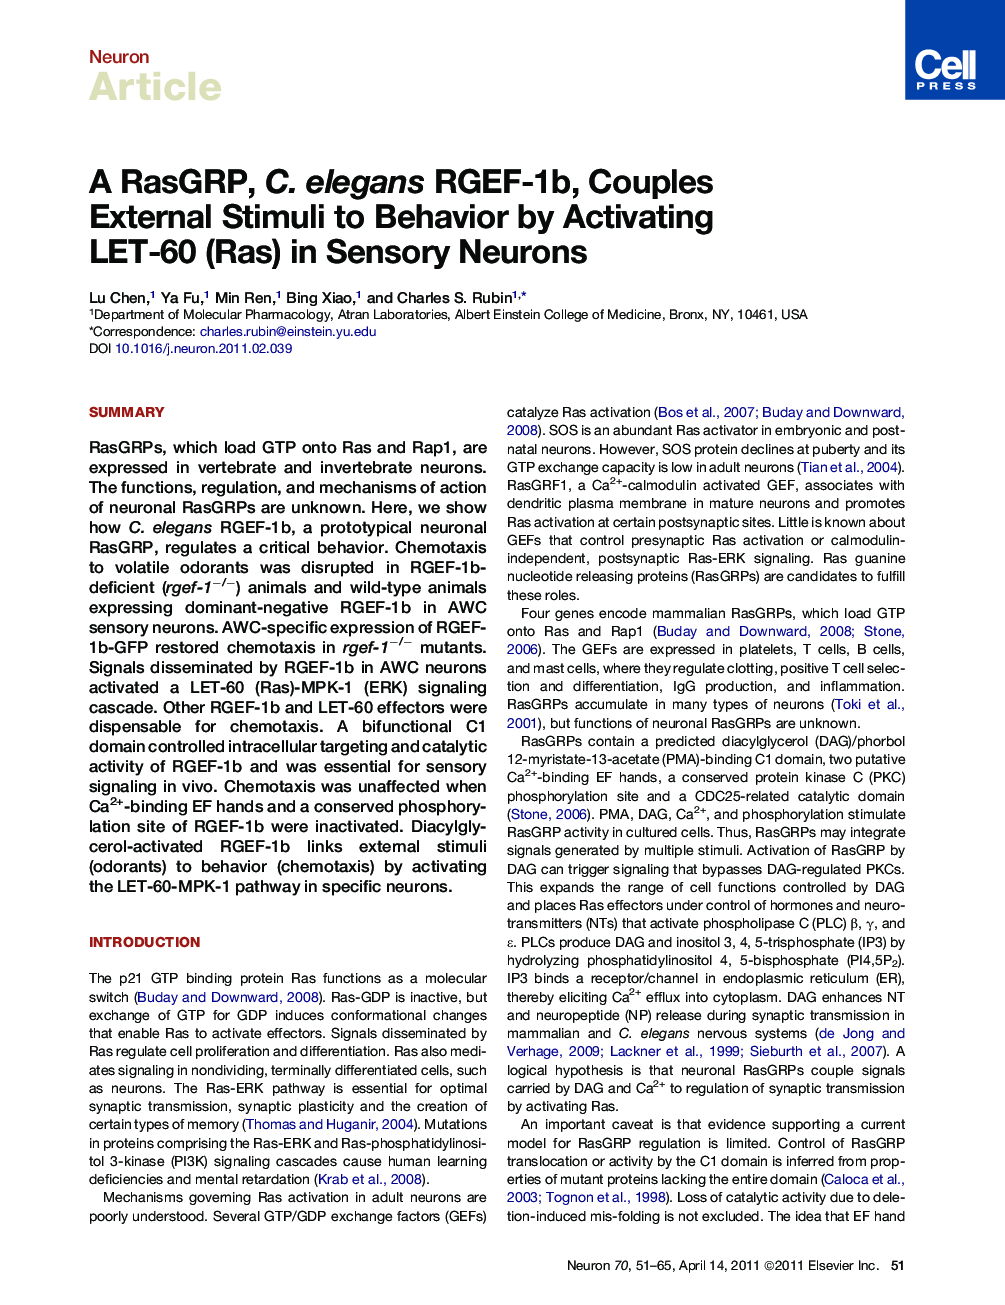 A RasGRP, C. elegans RGEF-1b, Couples External Stimuli to Behavior by Activating LET-60 (Ras) in Sensory Neurons